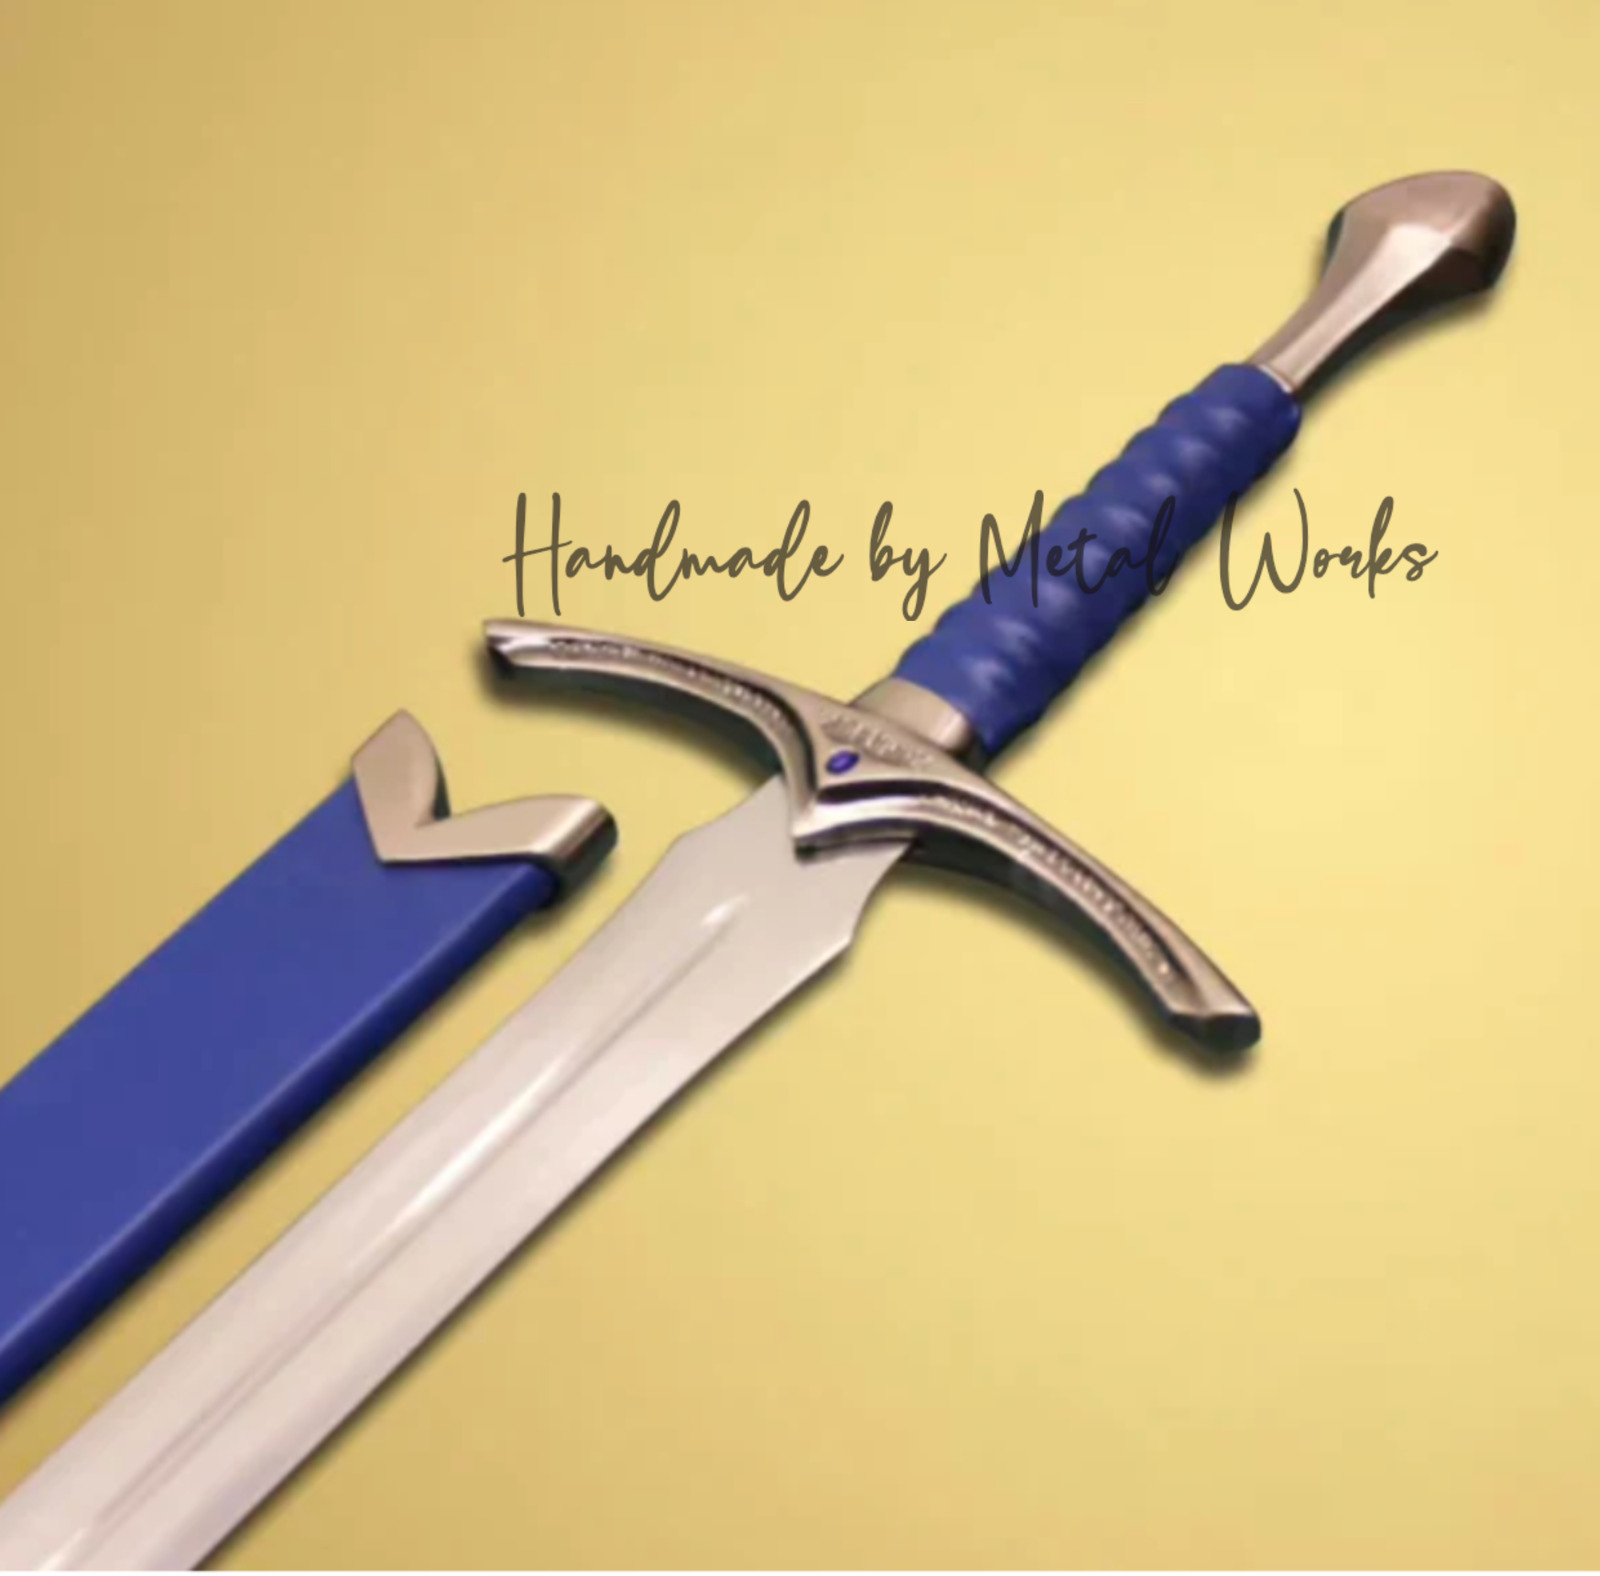 Glamdring Sword of Gandalf, Cosplay Replica Handmade Sword with Scabbard